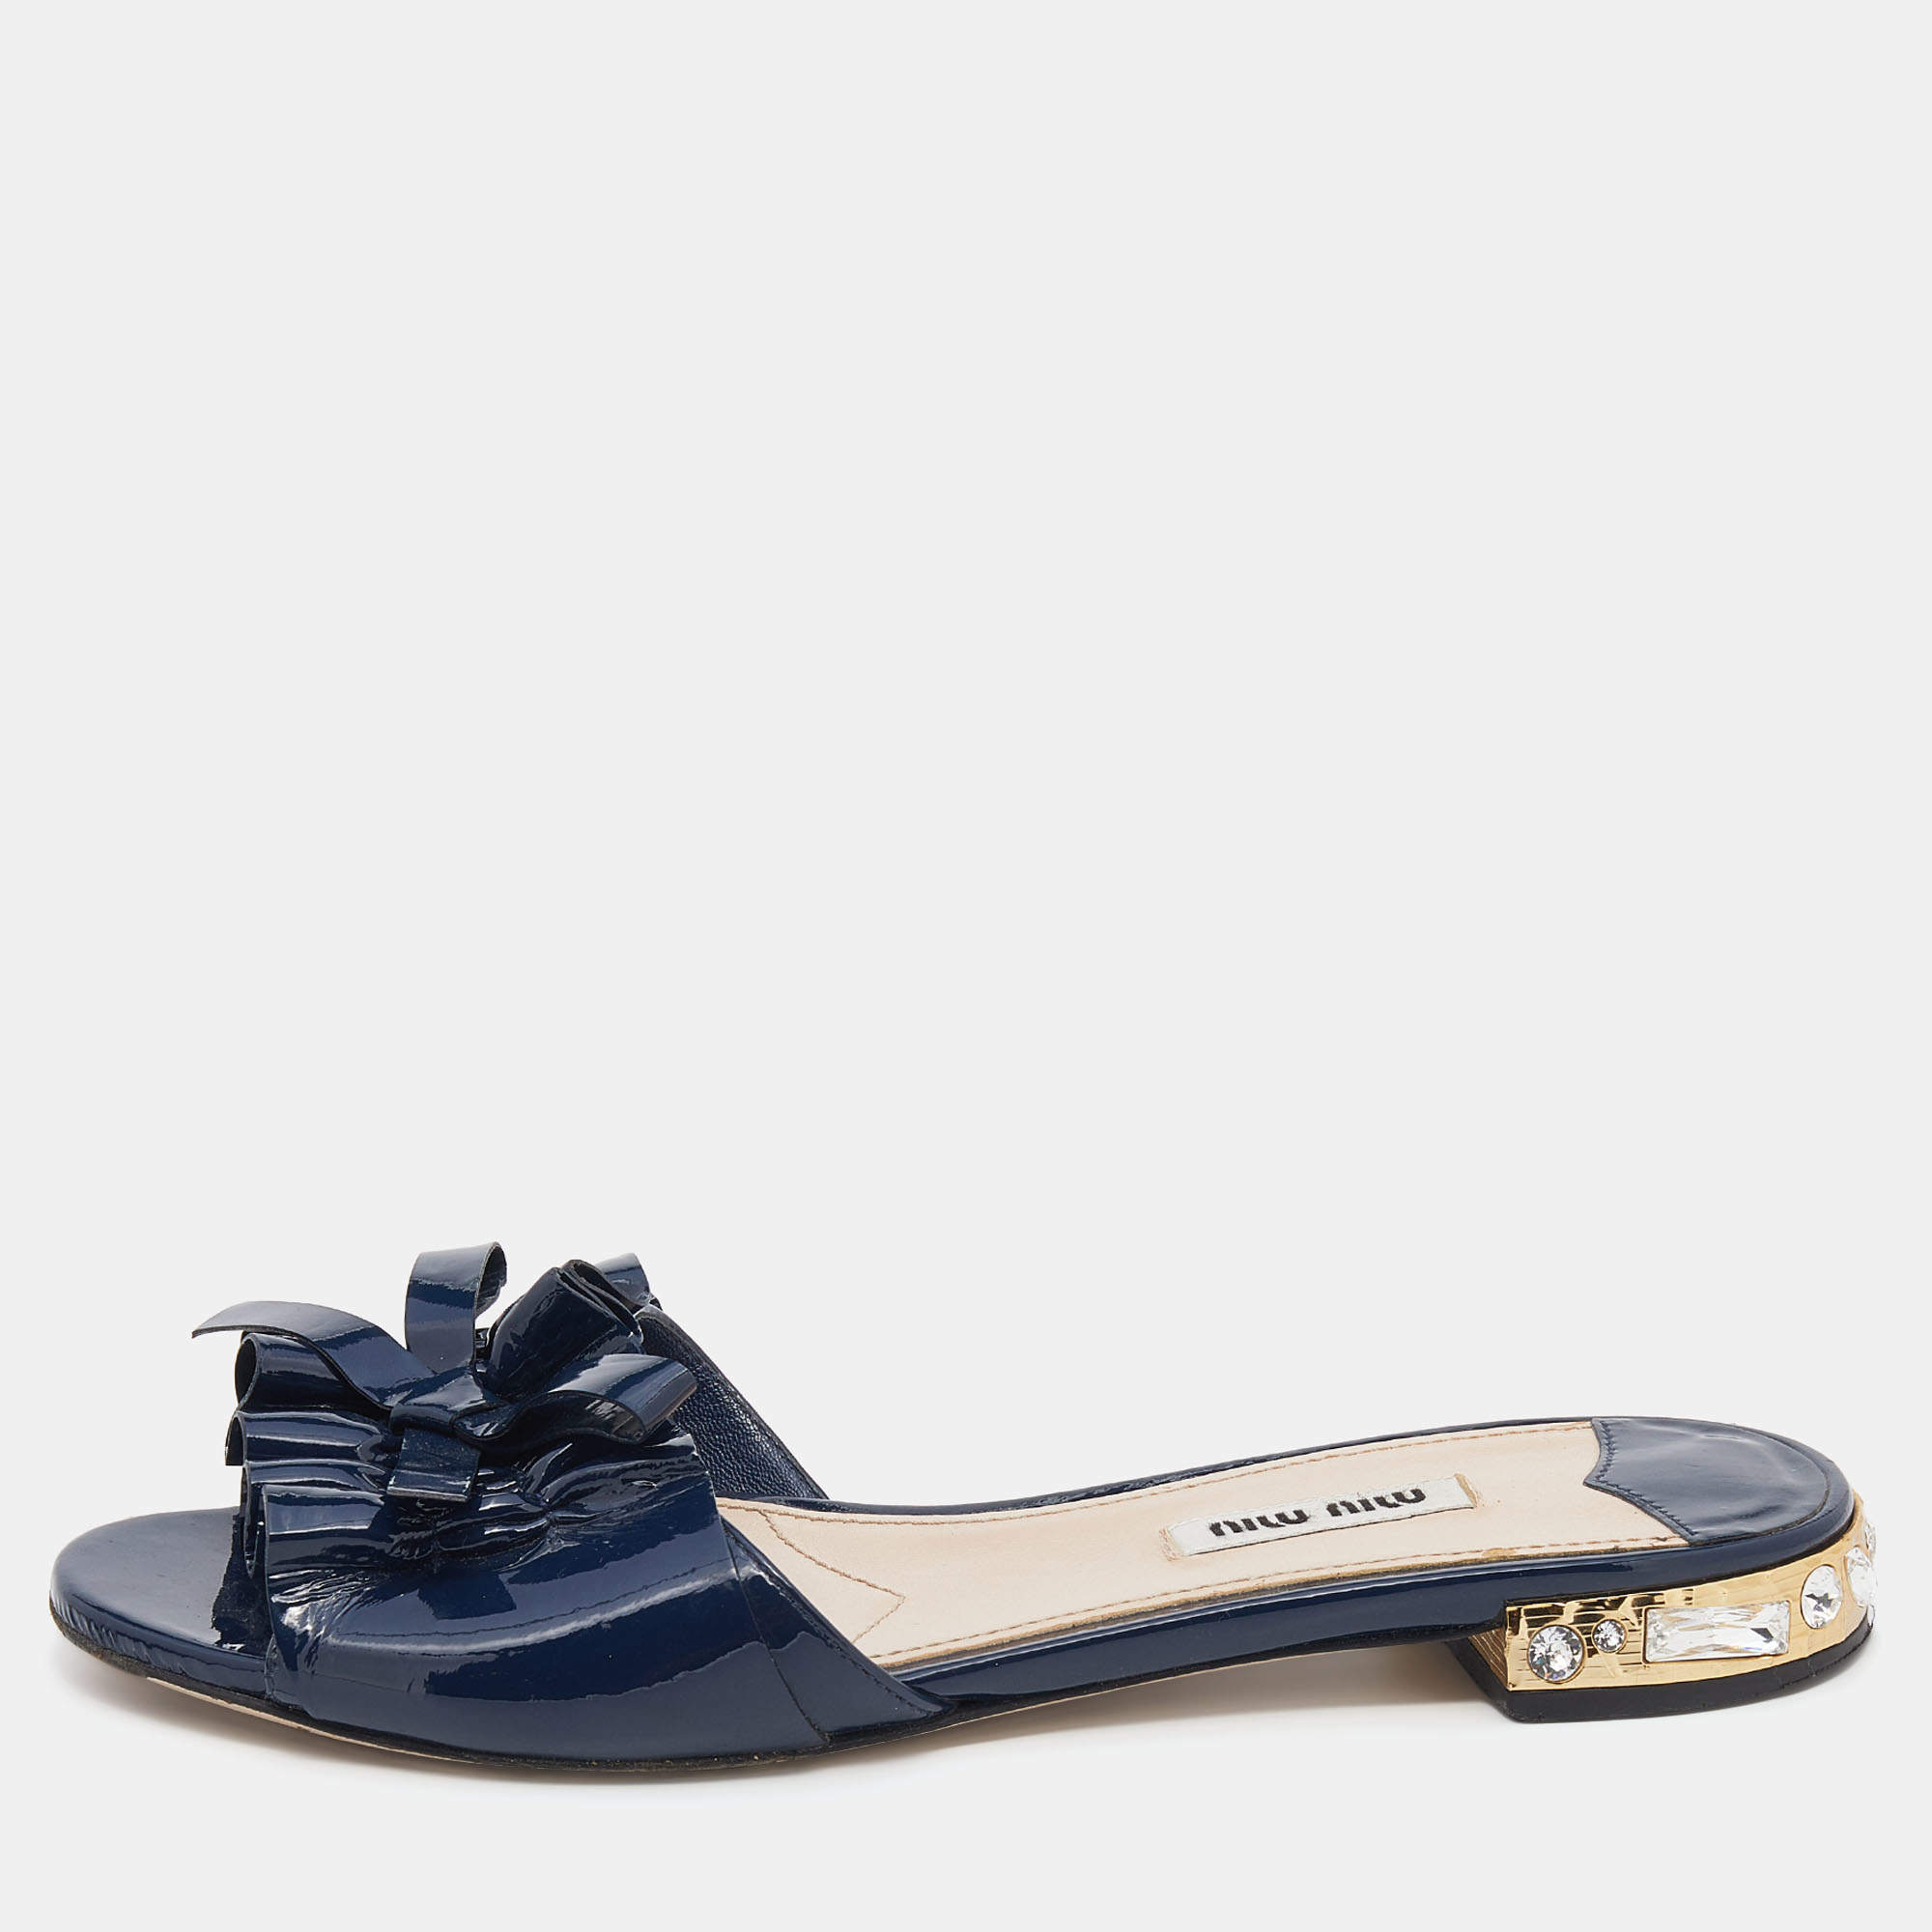 Miu Miu Navy Blue Patent Leather Bow Crystal Embellished Heel Slide Sandals Size 37